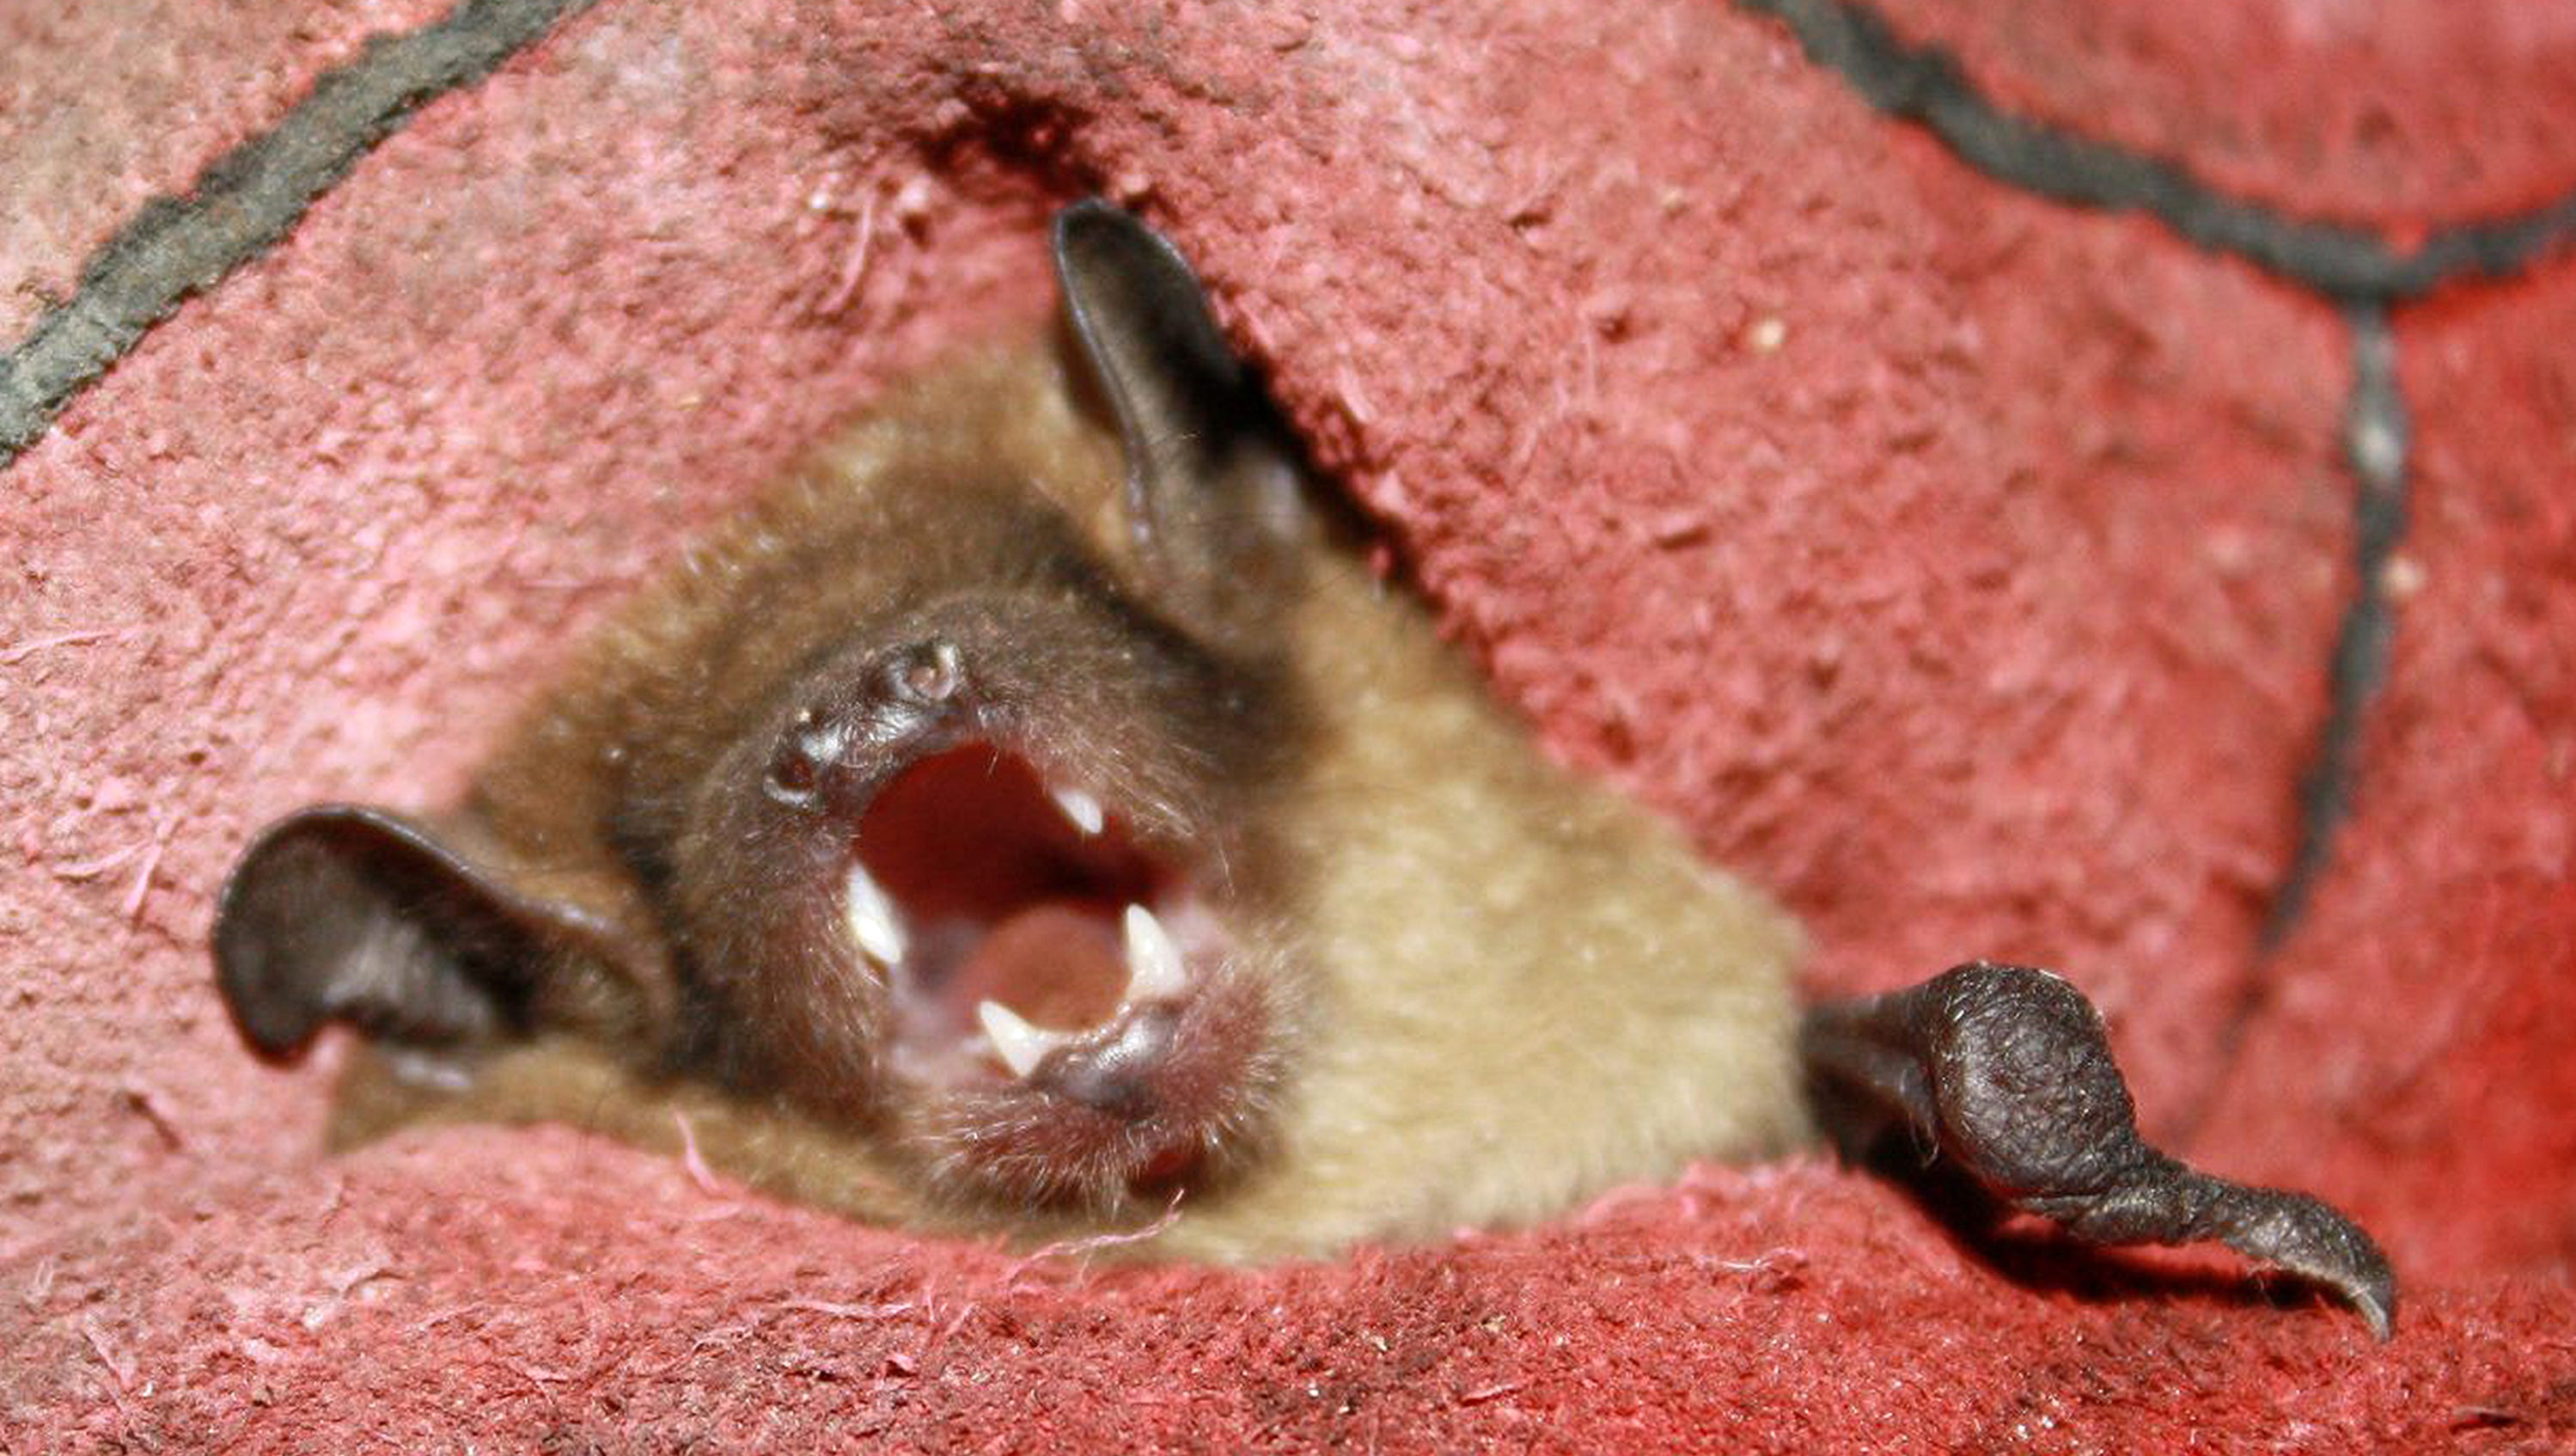 Bat bite causes rabies in Illinois